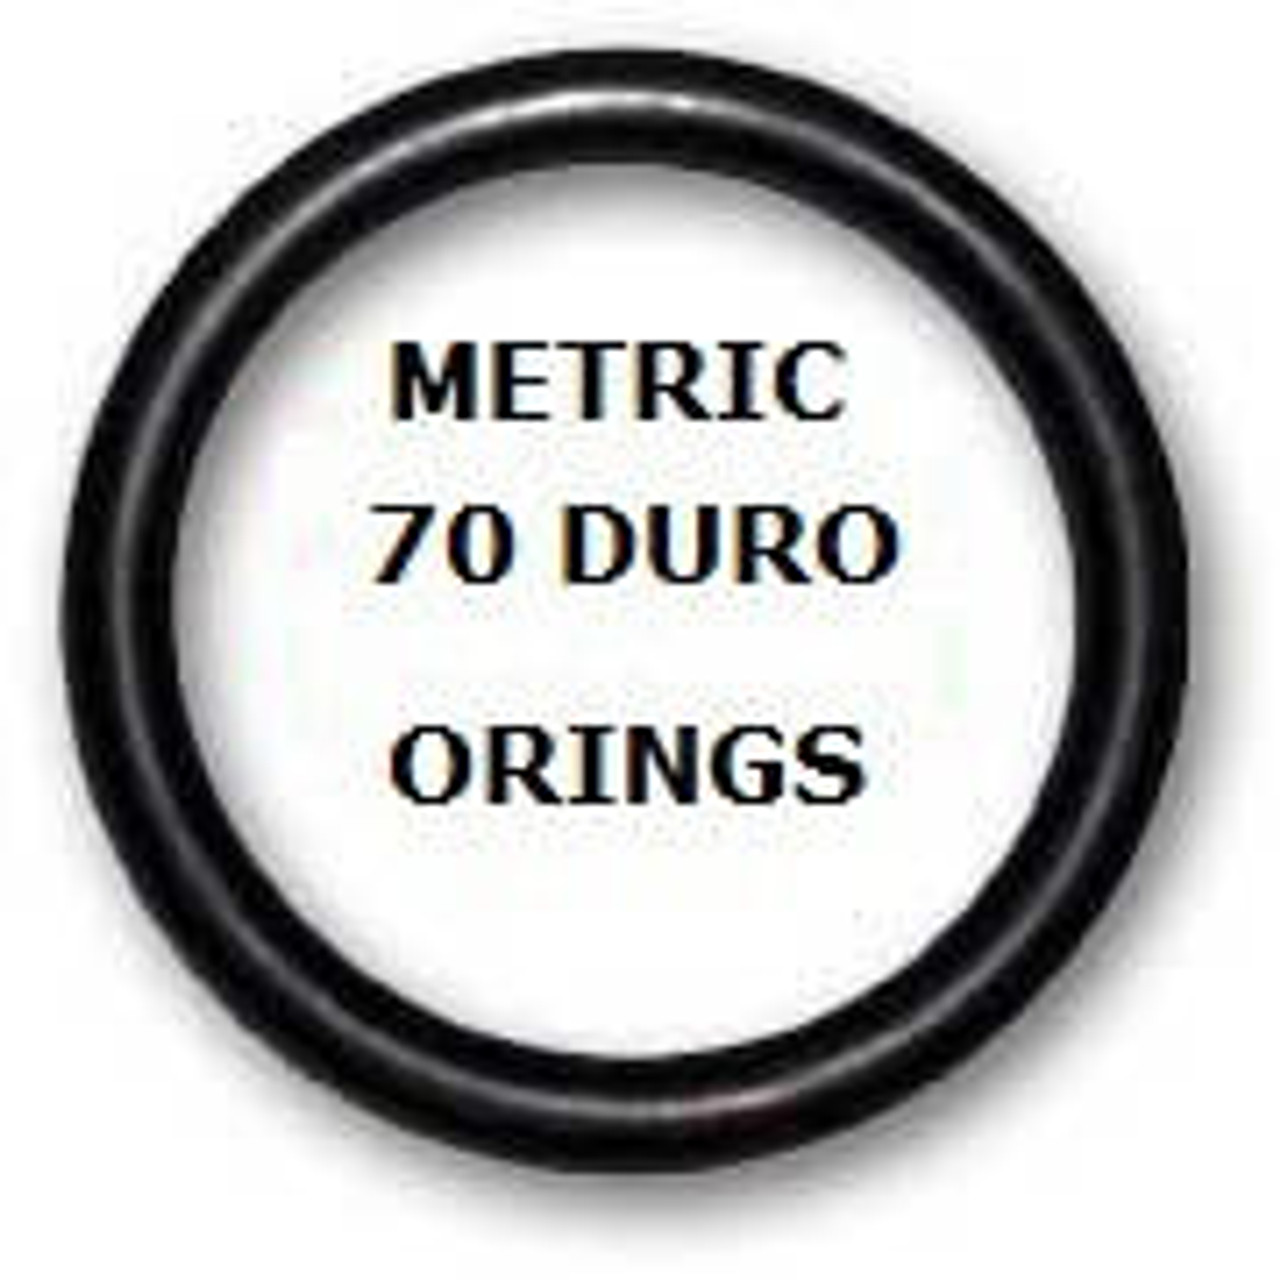 Metric Buna  O-rings 152 x 3mm Price for 1 pc